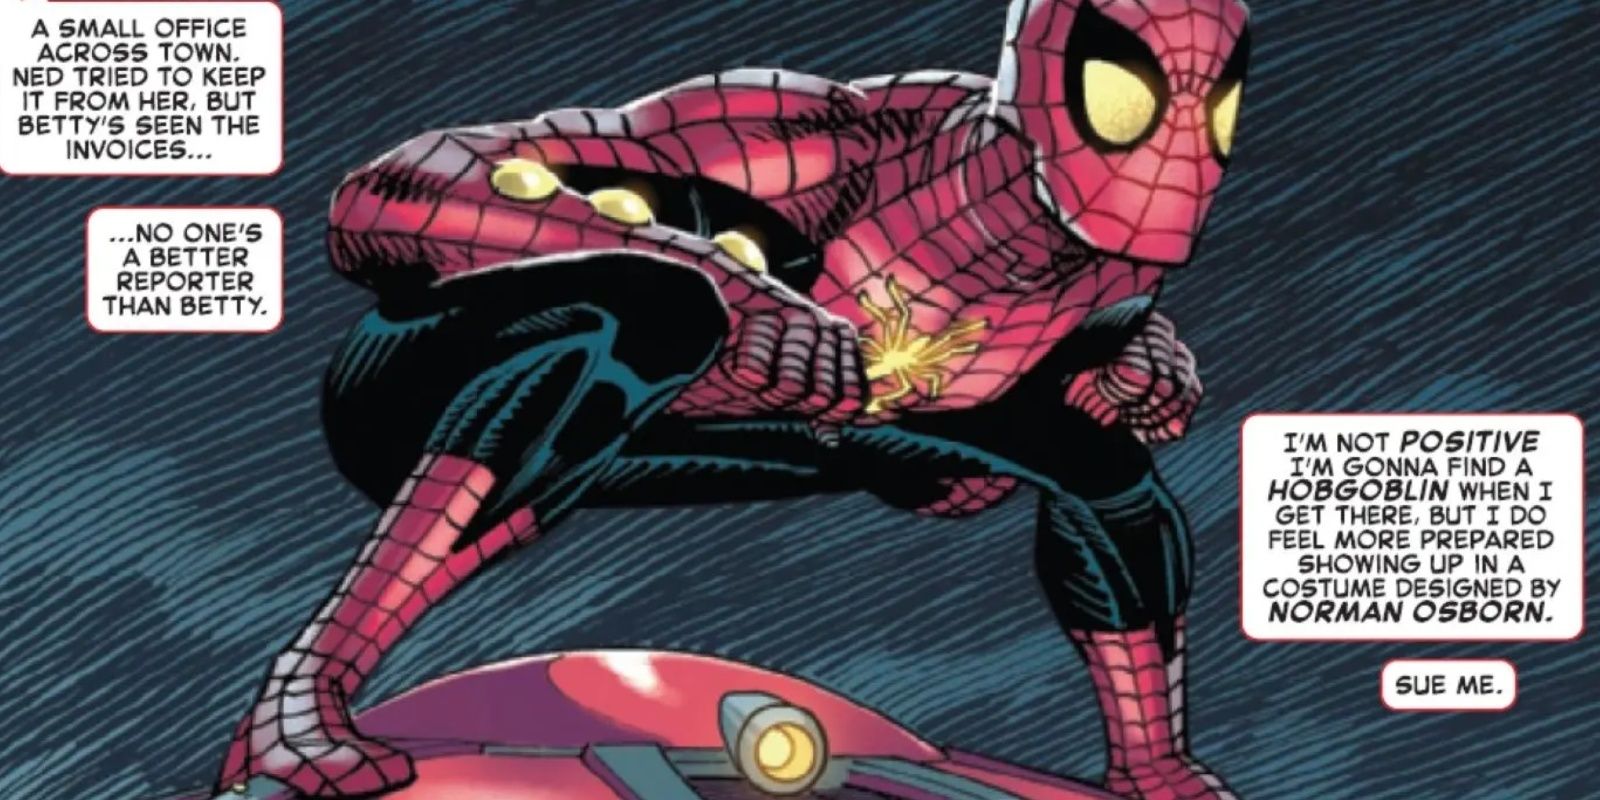 Norman Osborn as Spider-Man